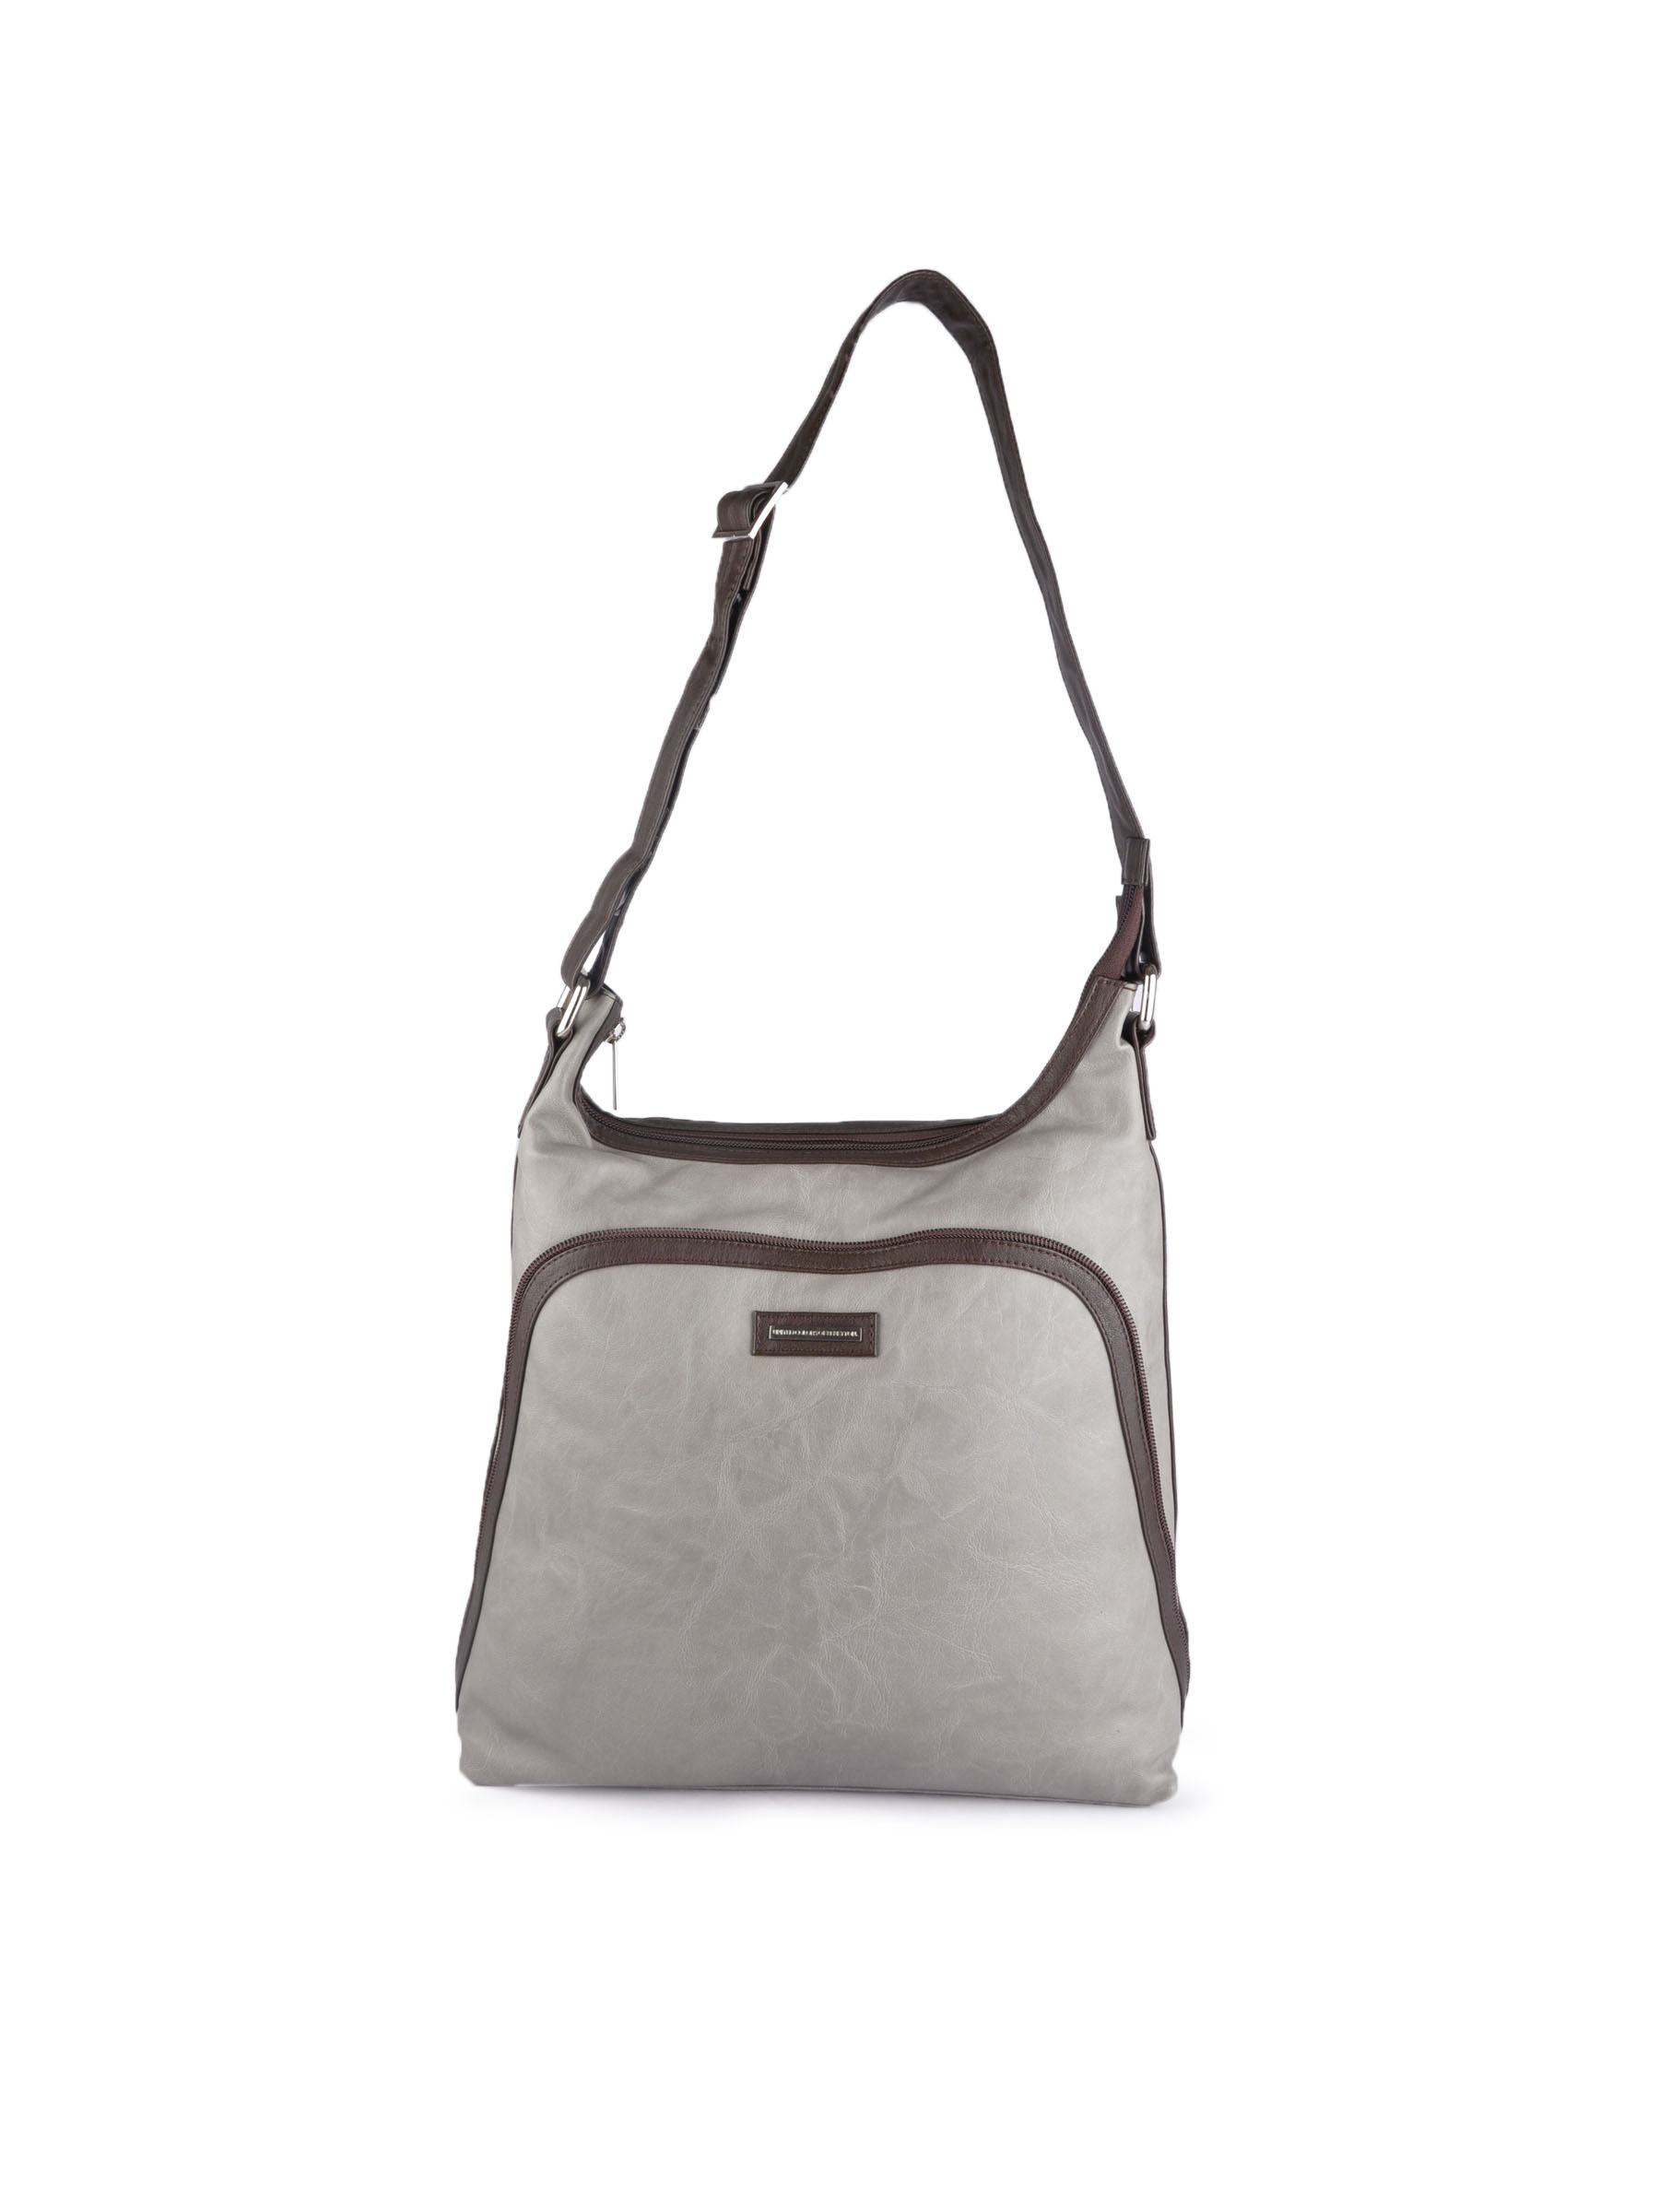 United Colors of Benetton Grey  Handbag